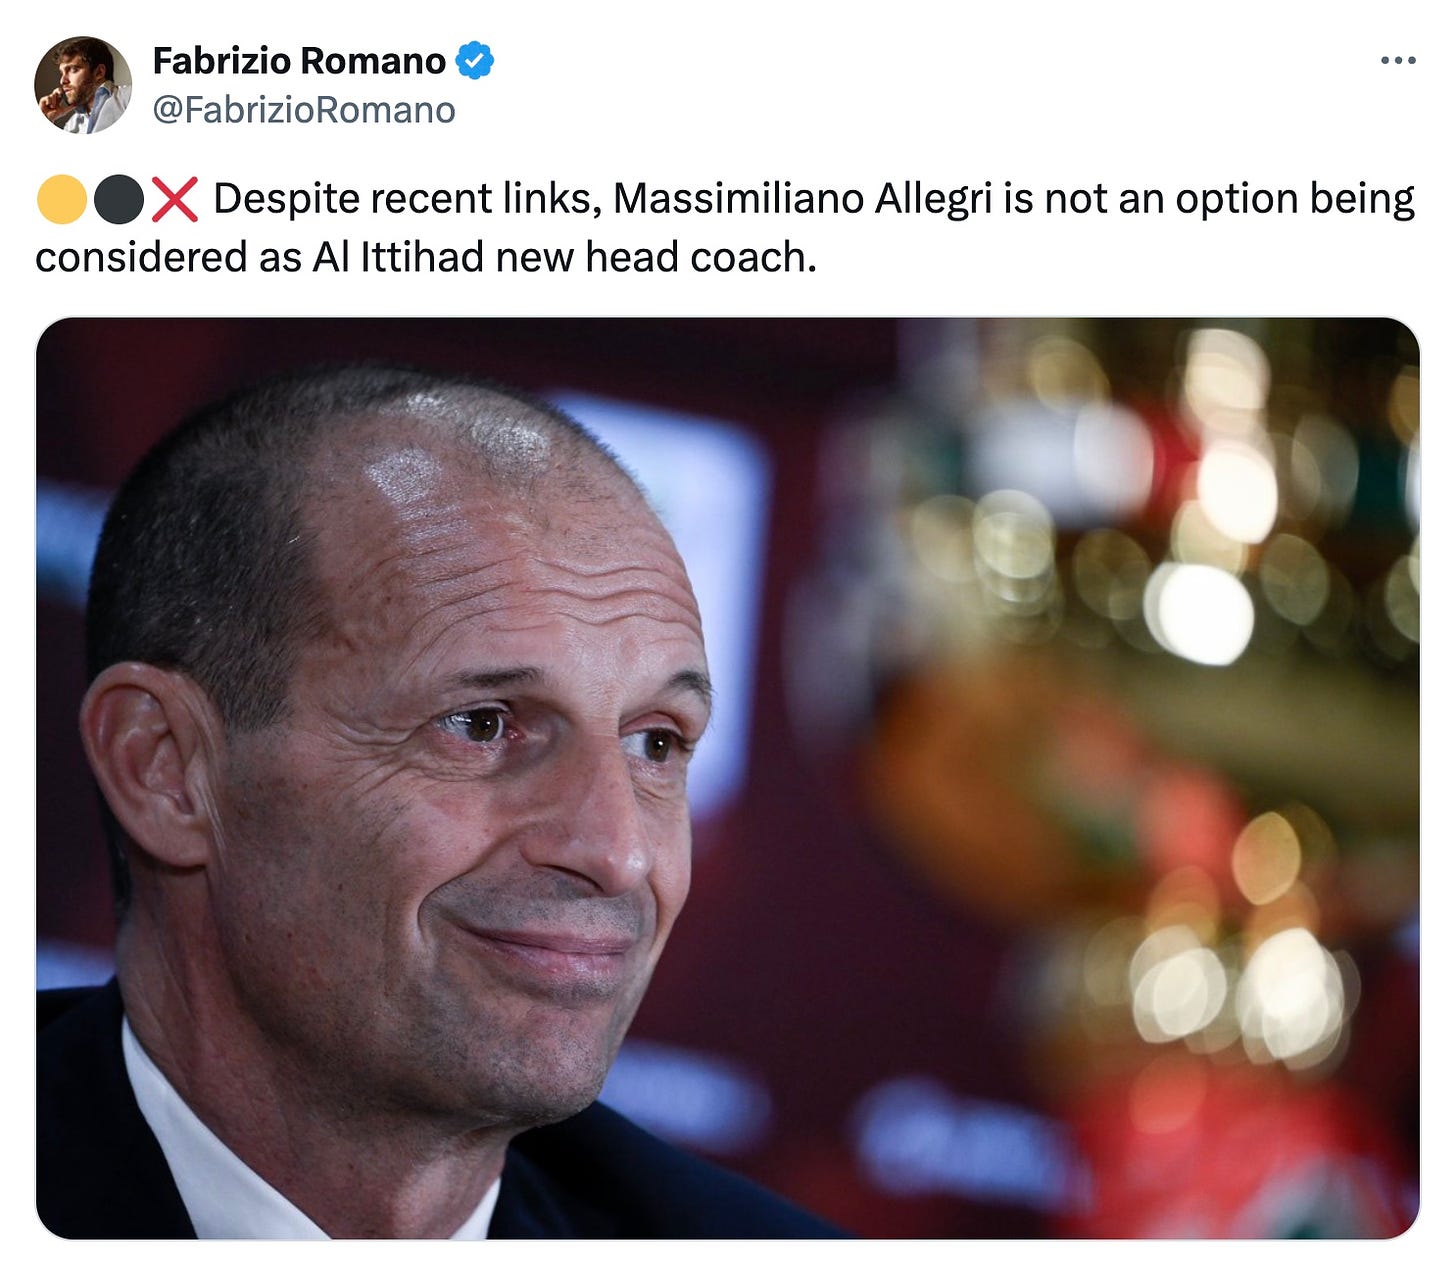 A tweet by Fabrizio Romano about Massimiliano Allegri not going to Al-Ittihad